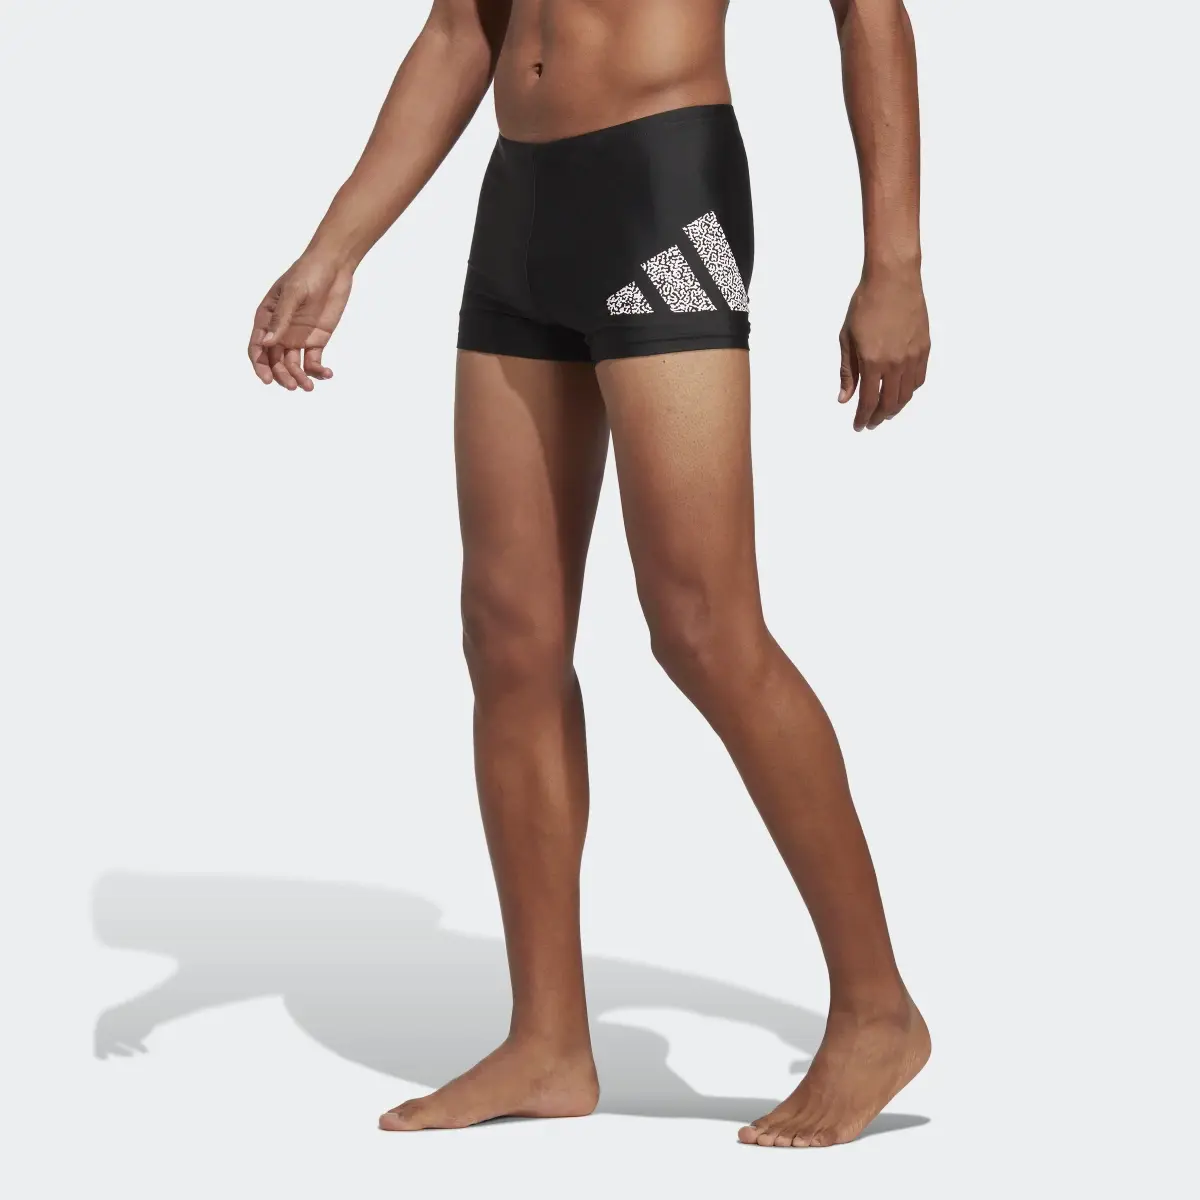 Adidas Branded Swim Boxers. 1